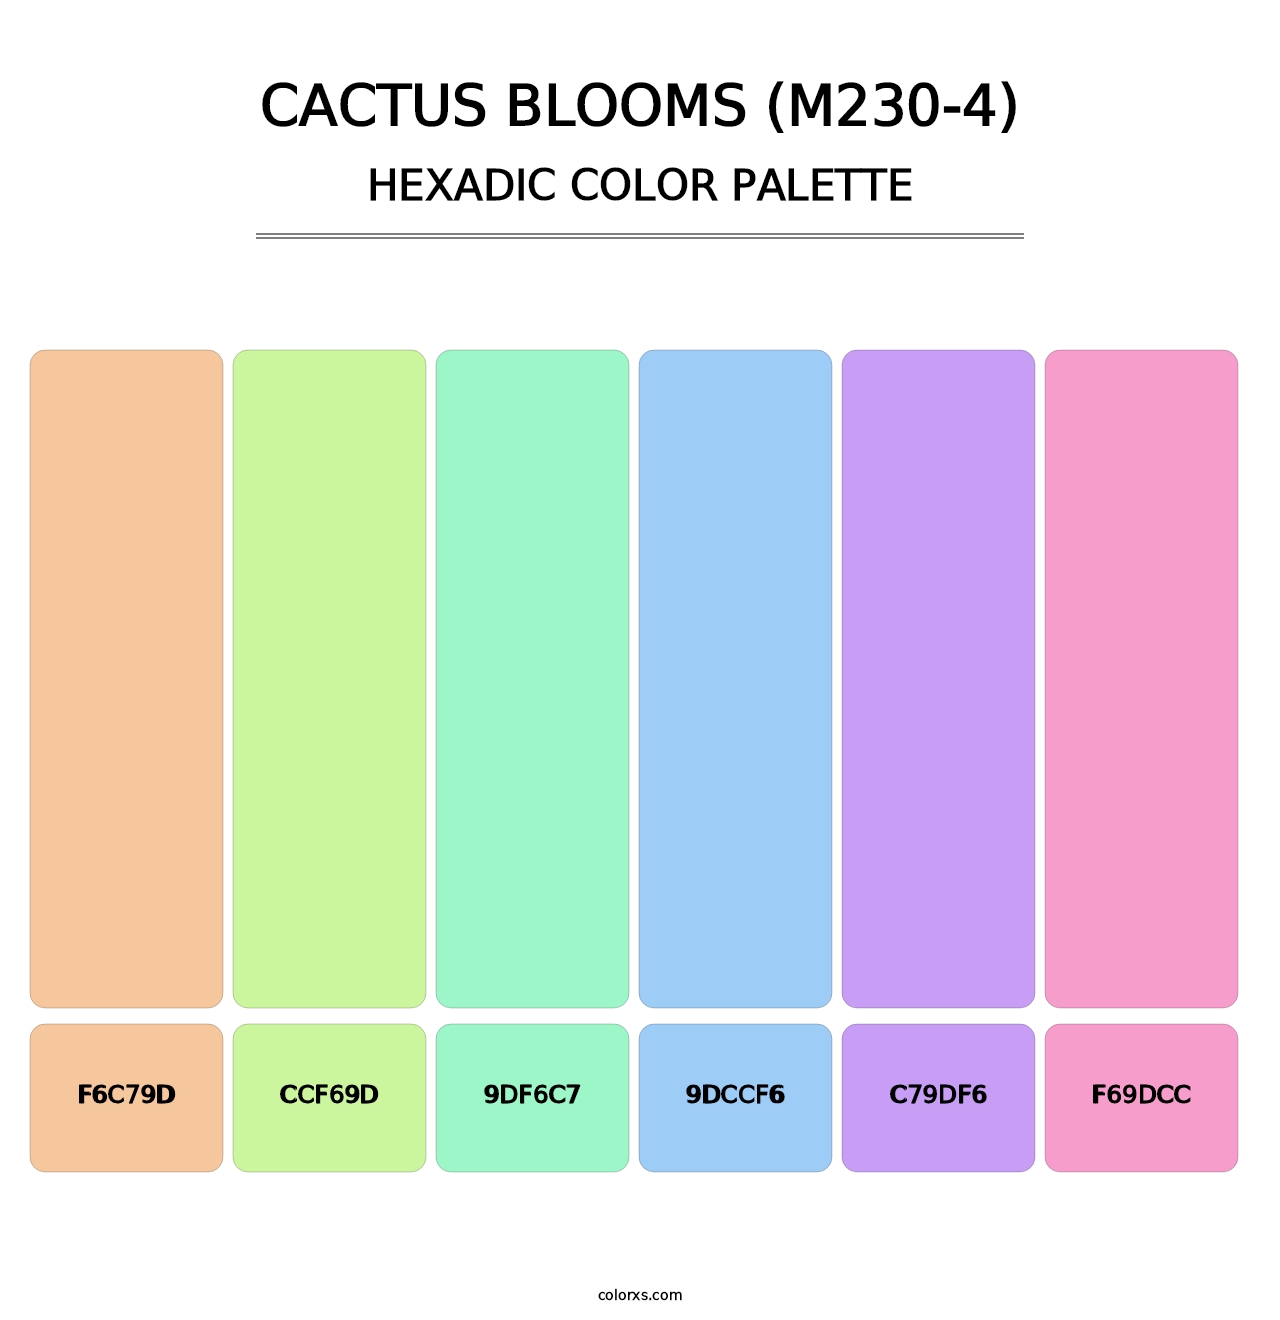 Cactus Blooms (M230-4) - Hexadic Color Palette